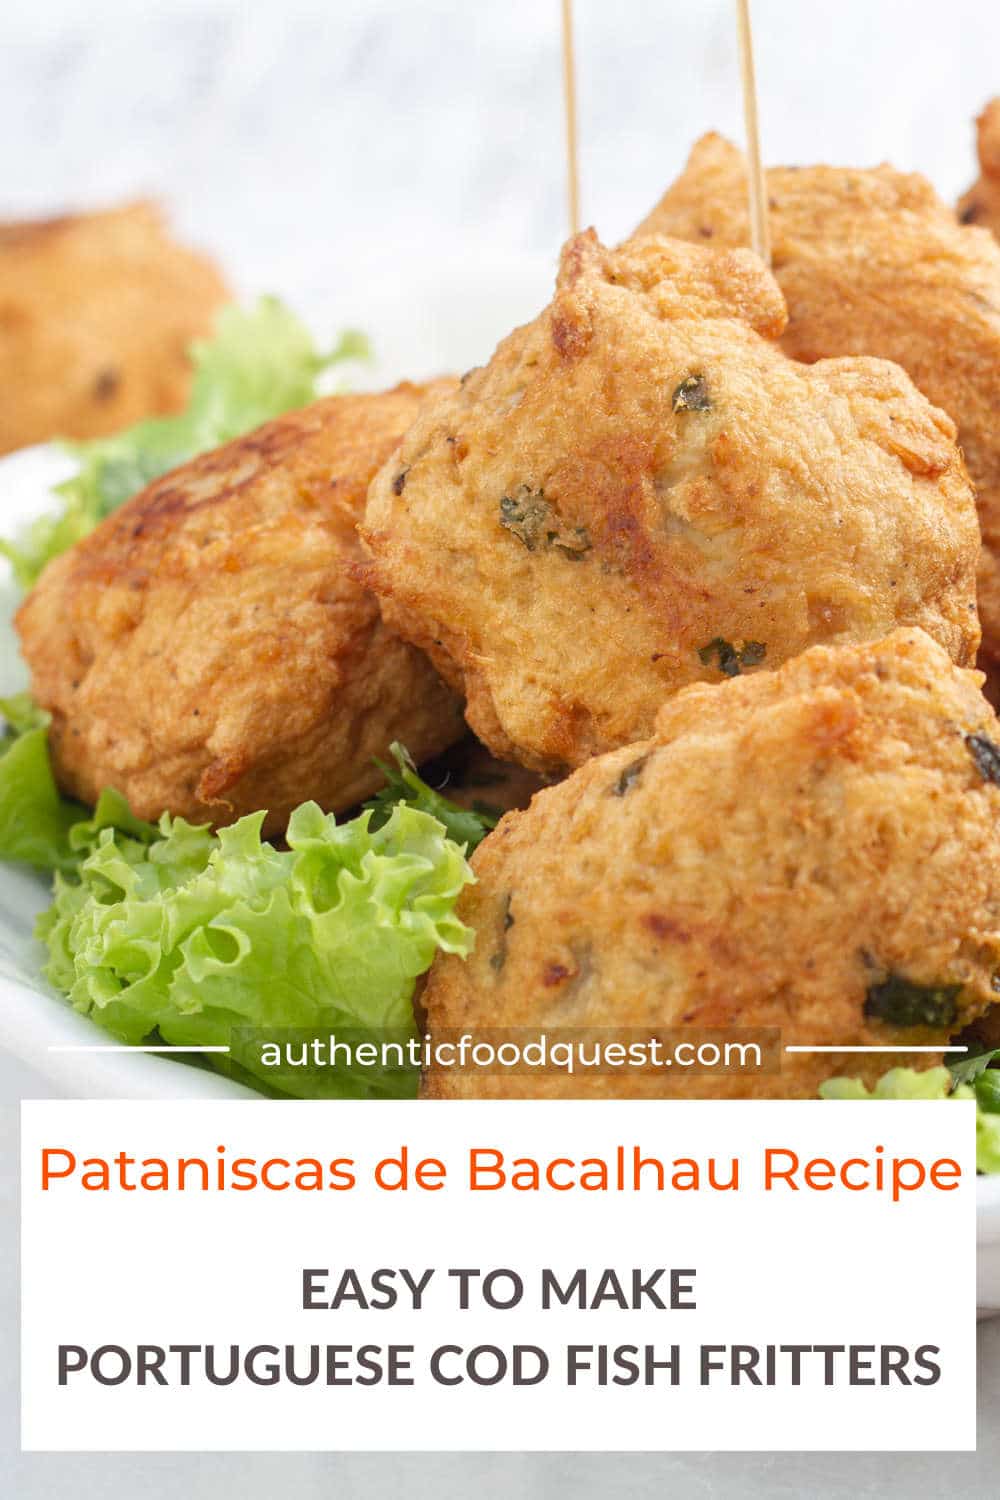 Pataniscas De Bacalhau Recipe: Easy To Make Portuguese Cod Fish Fritters